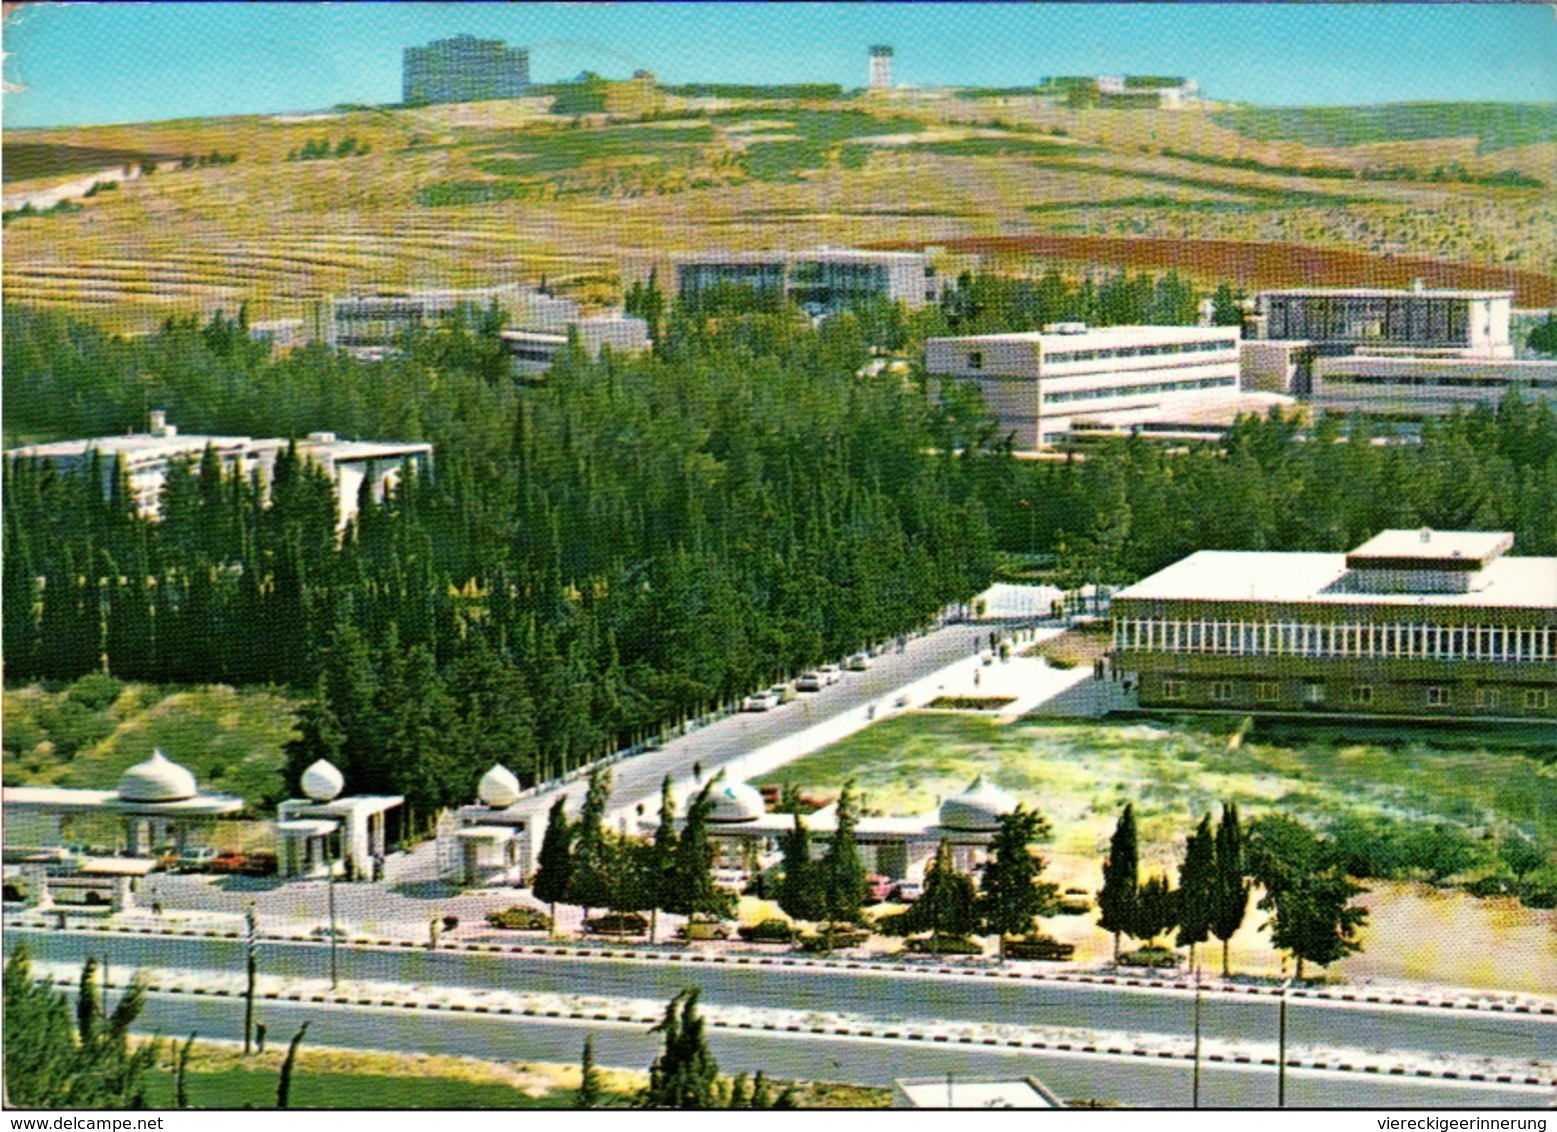 !  Postcard From Jordan, Jordanien Amman, Universität, University, Universite - Jordan